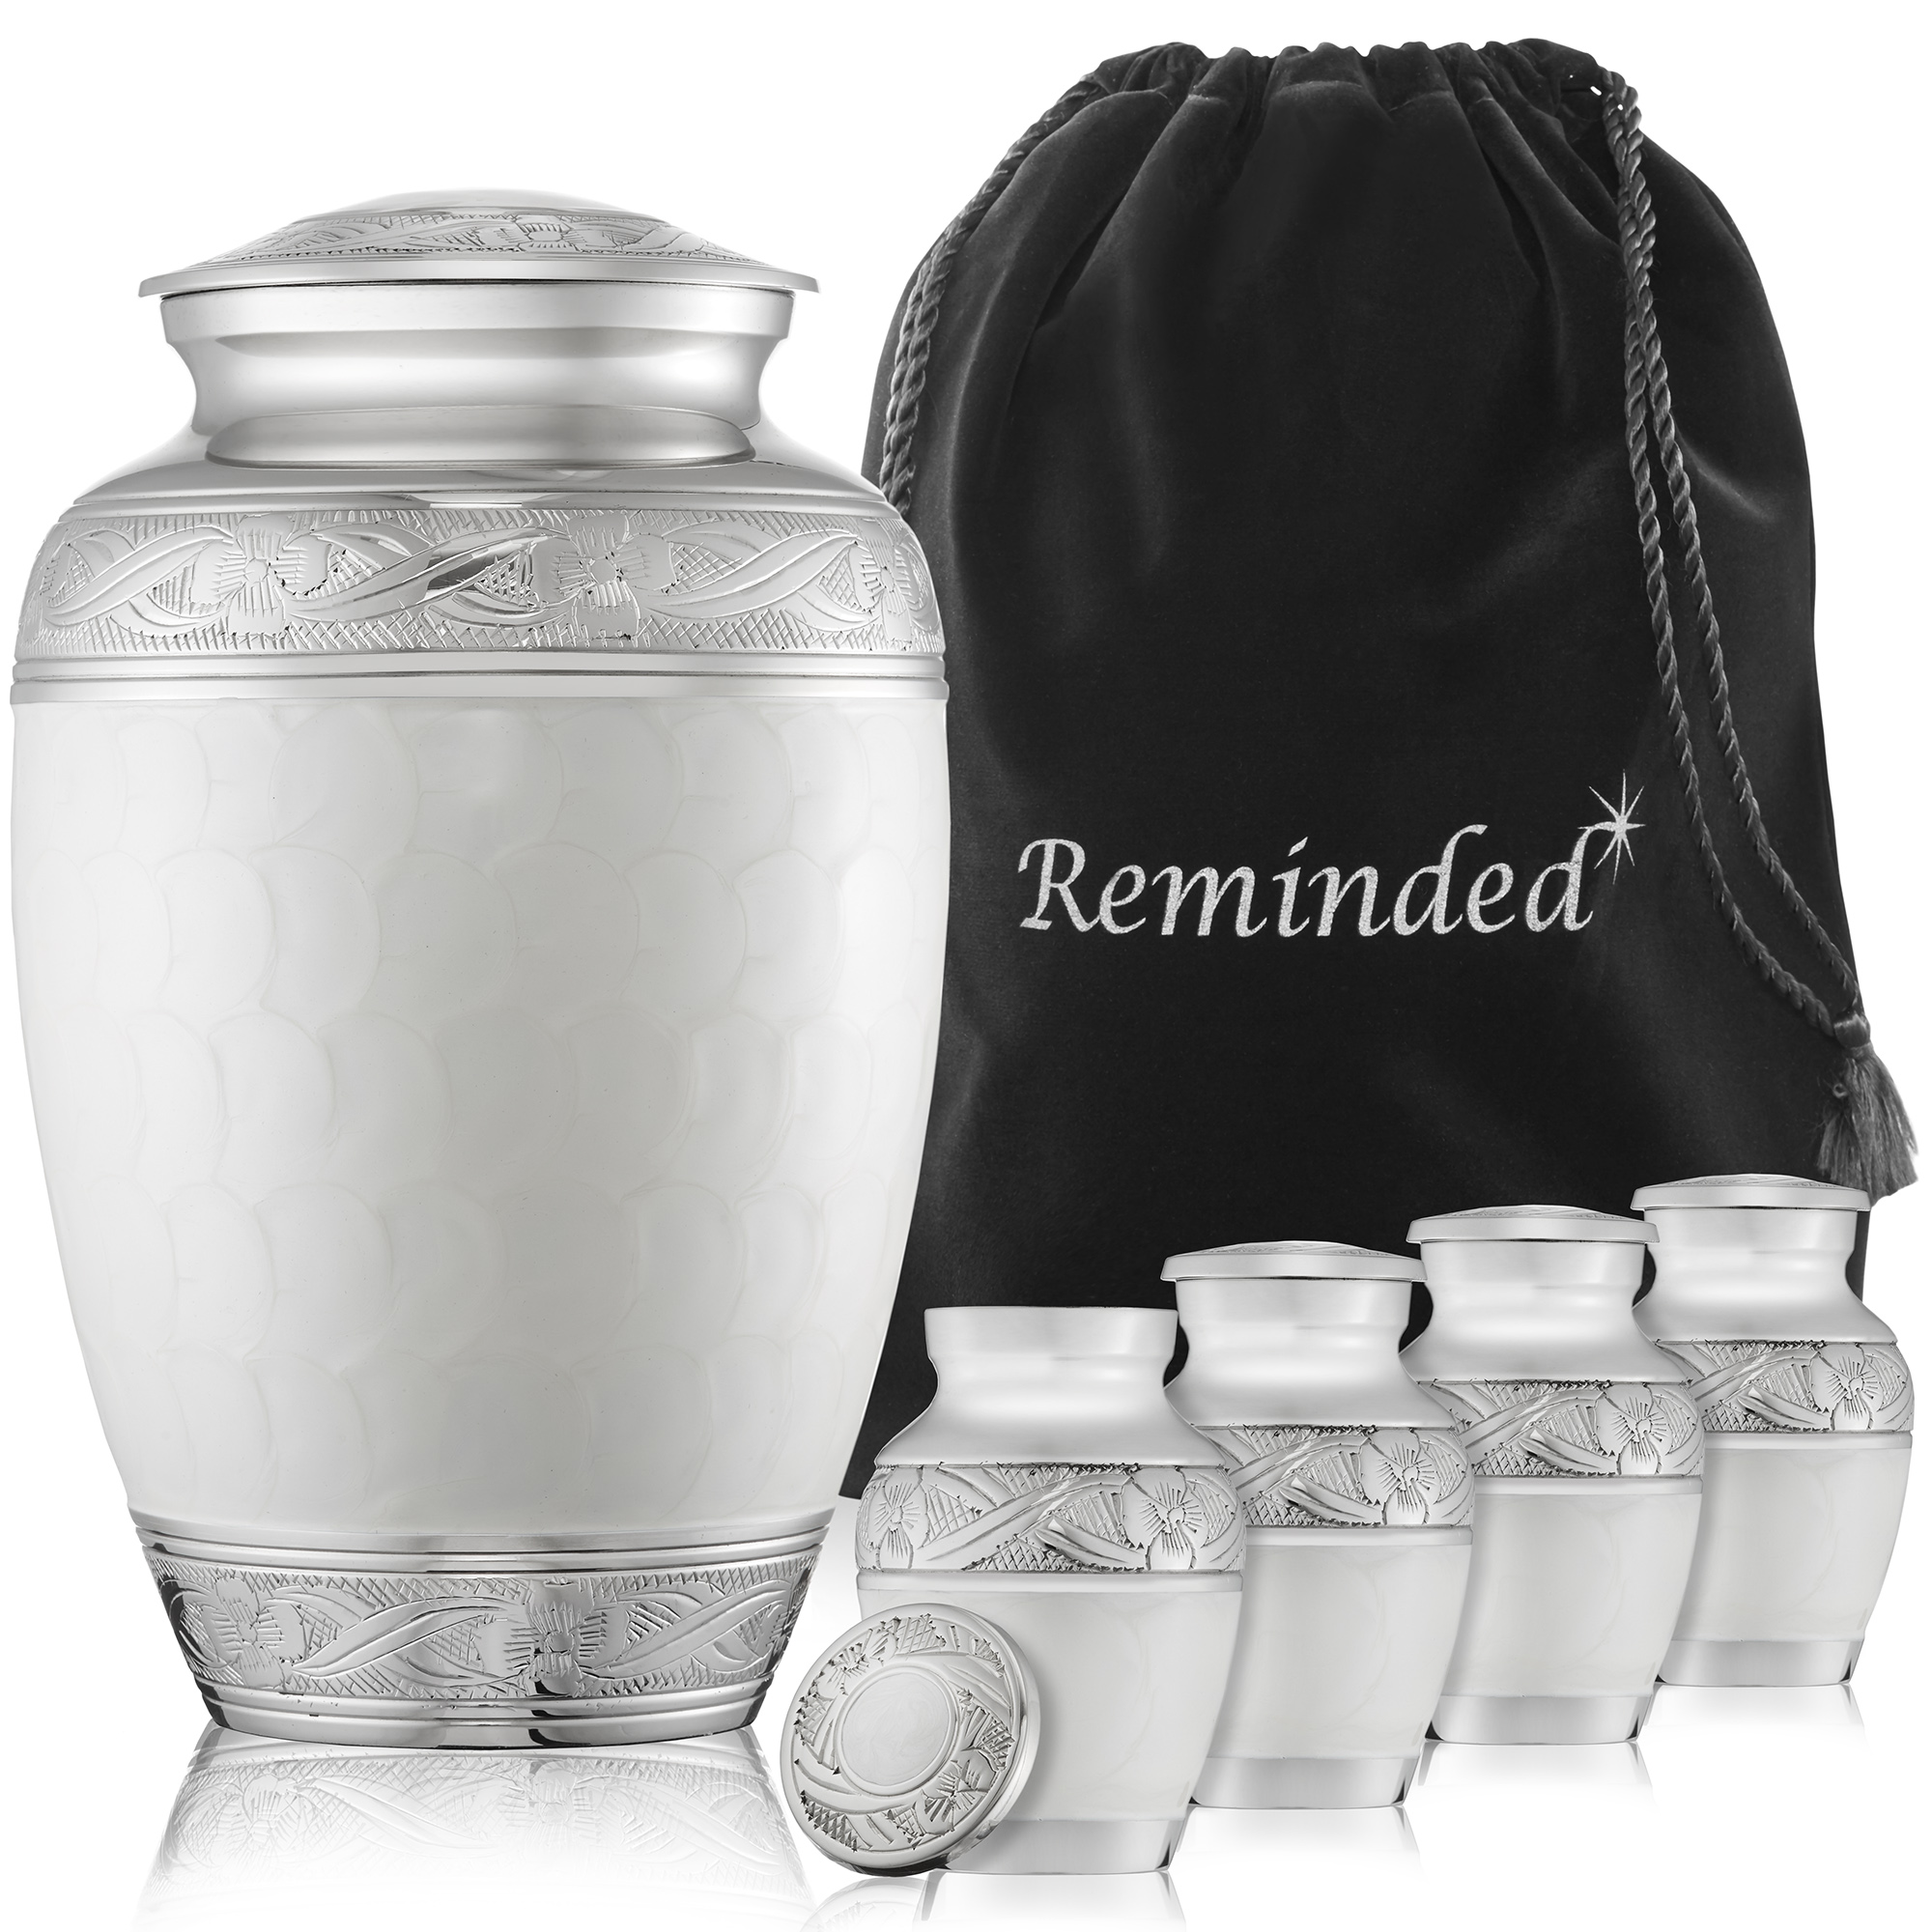 Reminded Set of 5 Decorative Cremation Urns for Human Ashes - 1 Adult + 4 Keepsake, White